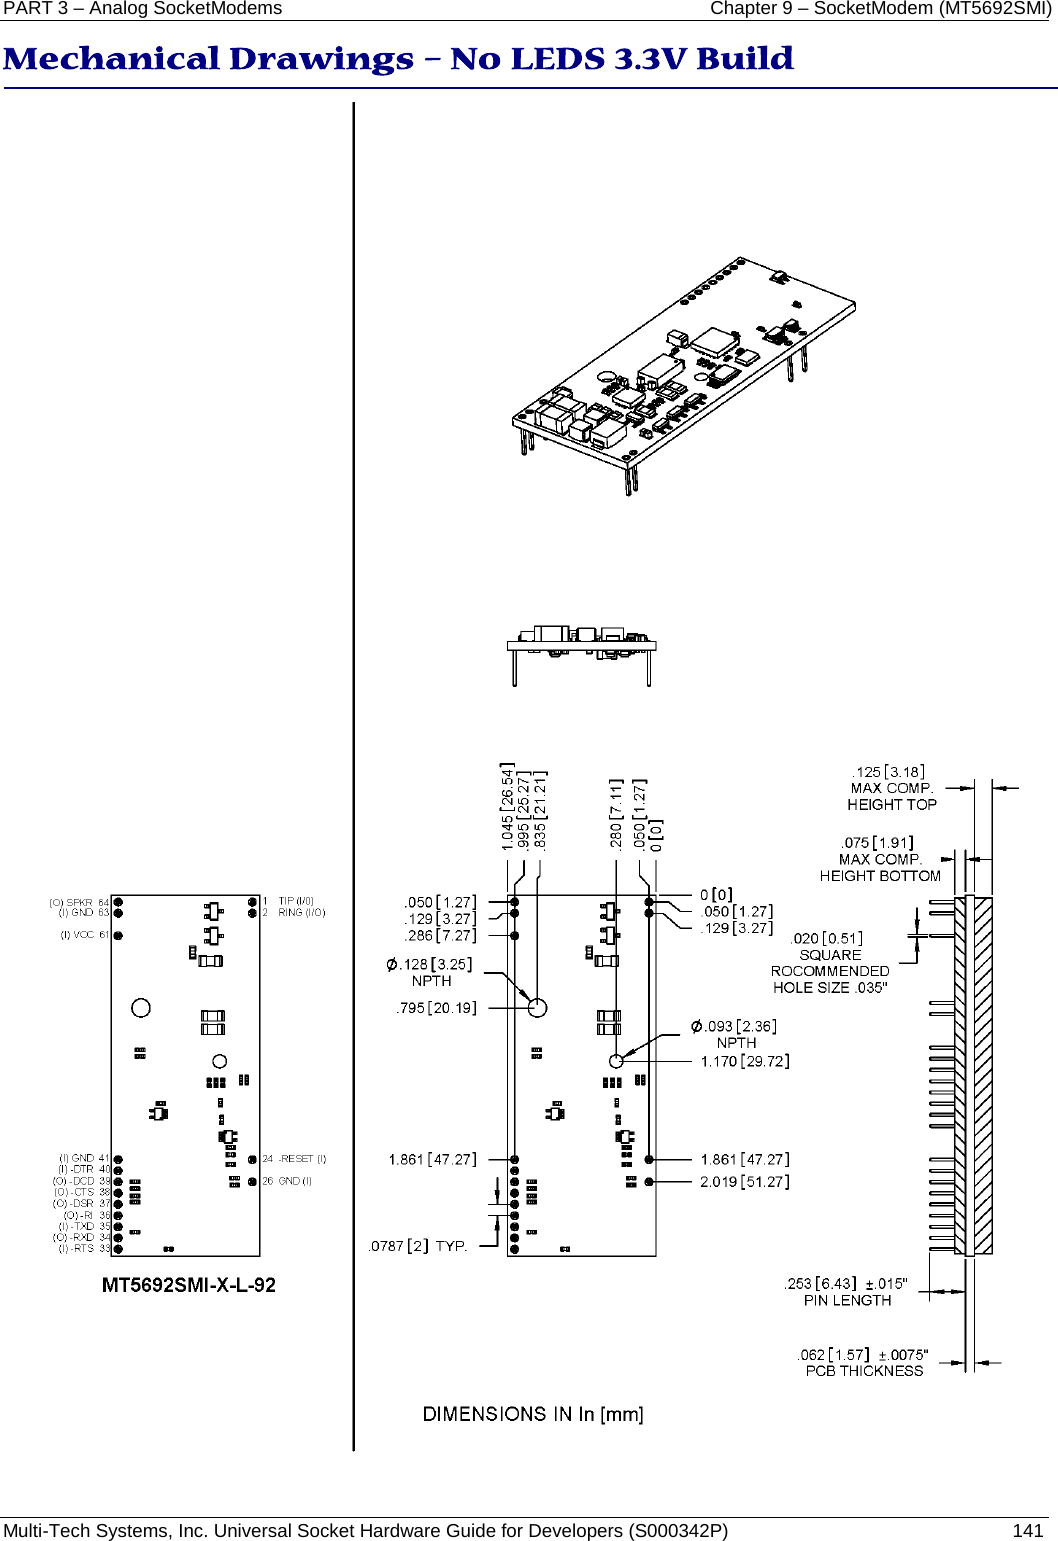 PART 3 – Analog SocketModems    Chapter 9 – SocketModem (MT5692SMI) Multi-Tech Systems, Inc. Universal Socket Hardware Guide for Developers (S000342P)  141  Mechanical Drawings – No LEDS 3.3V Build     